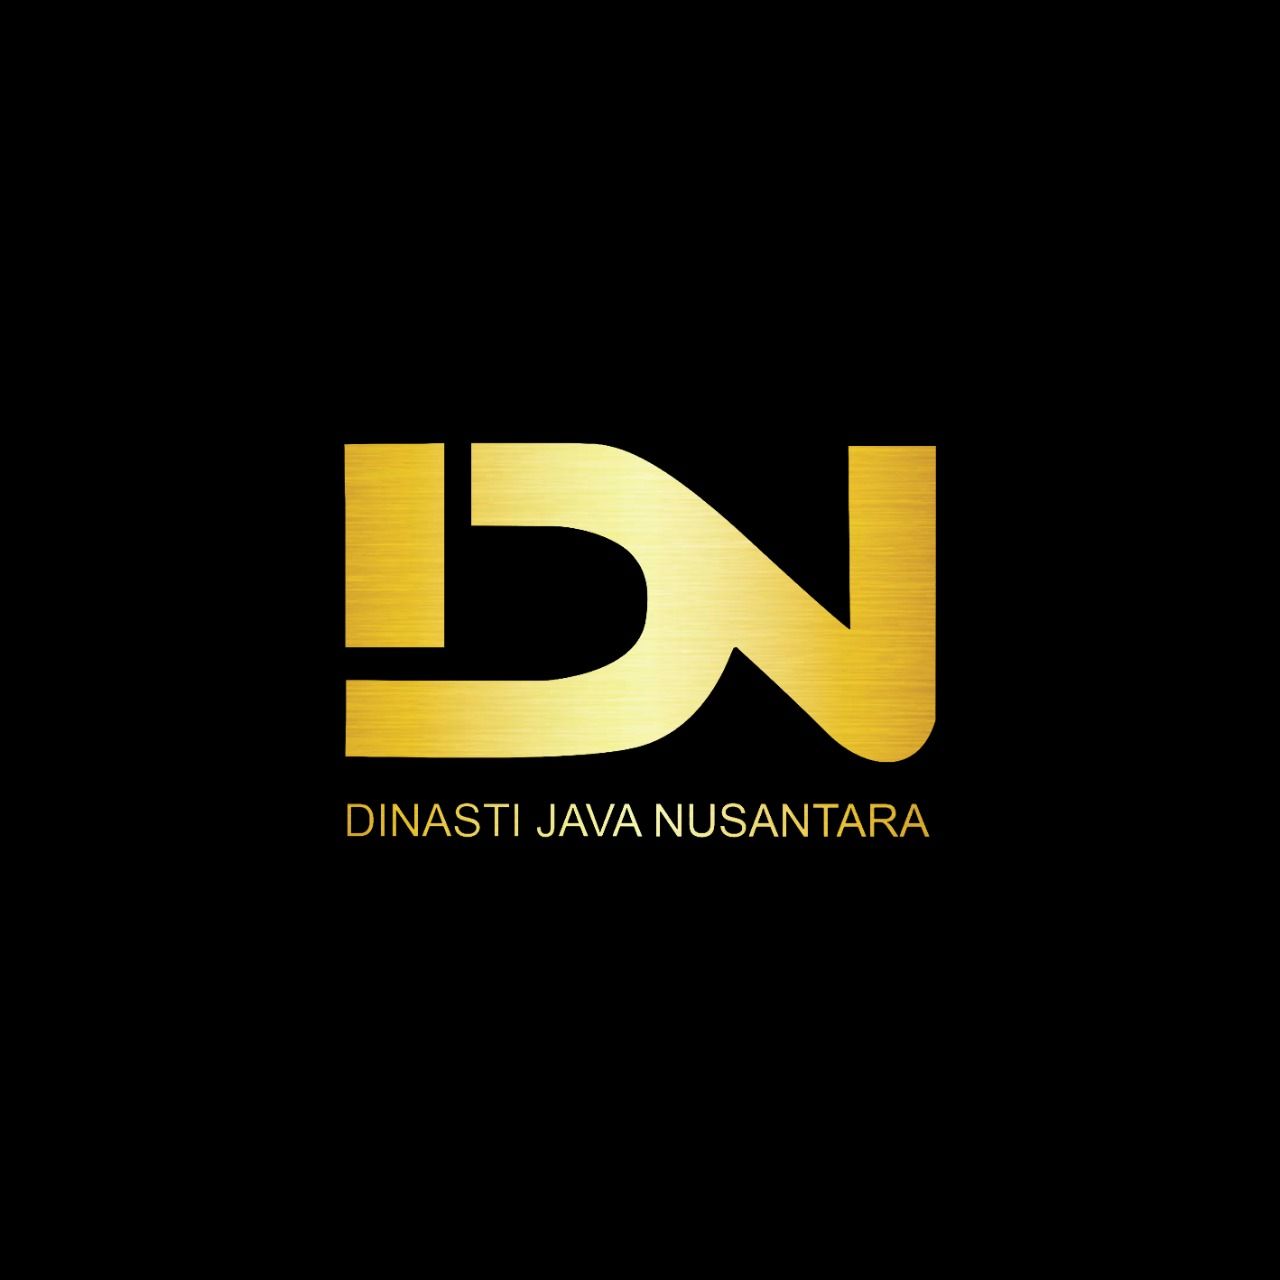 PT Dinasti Java Nusantara